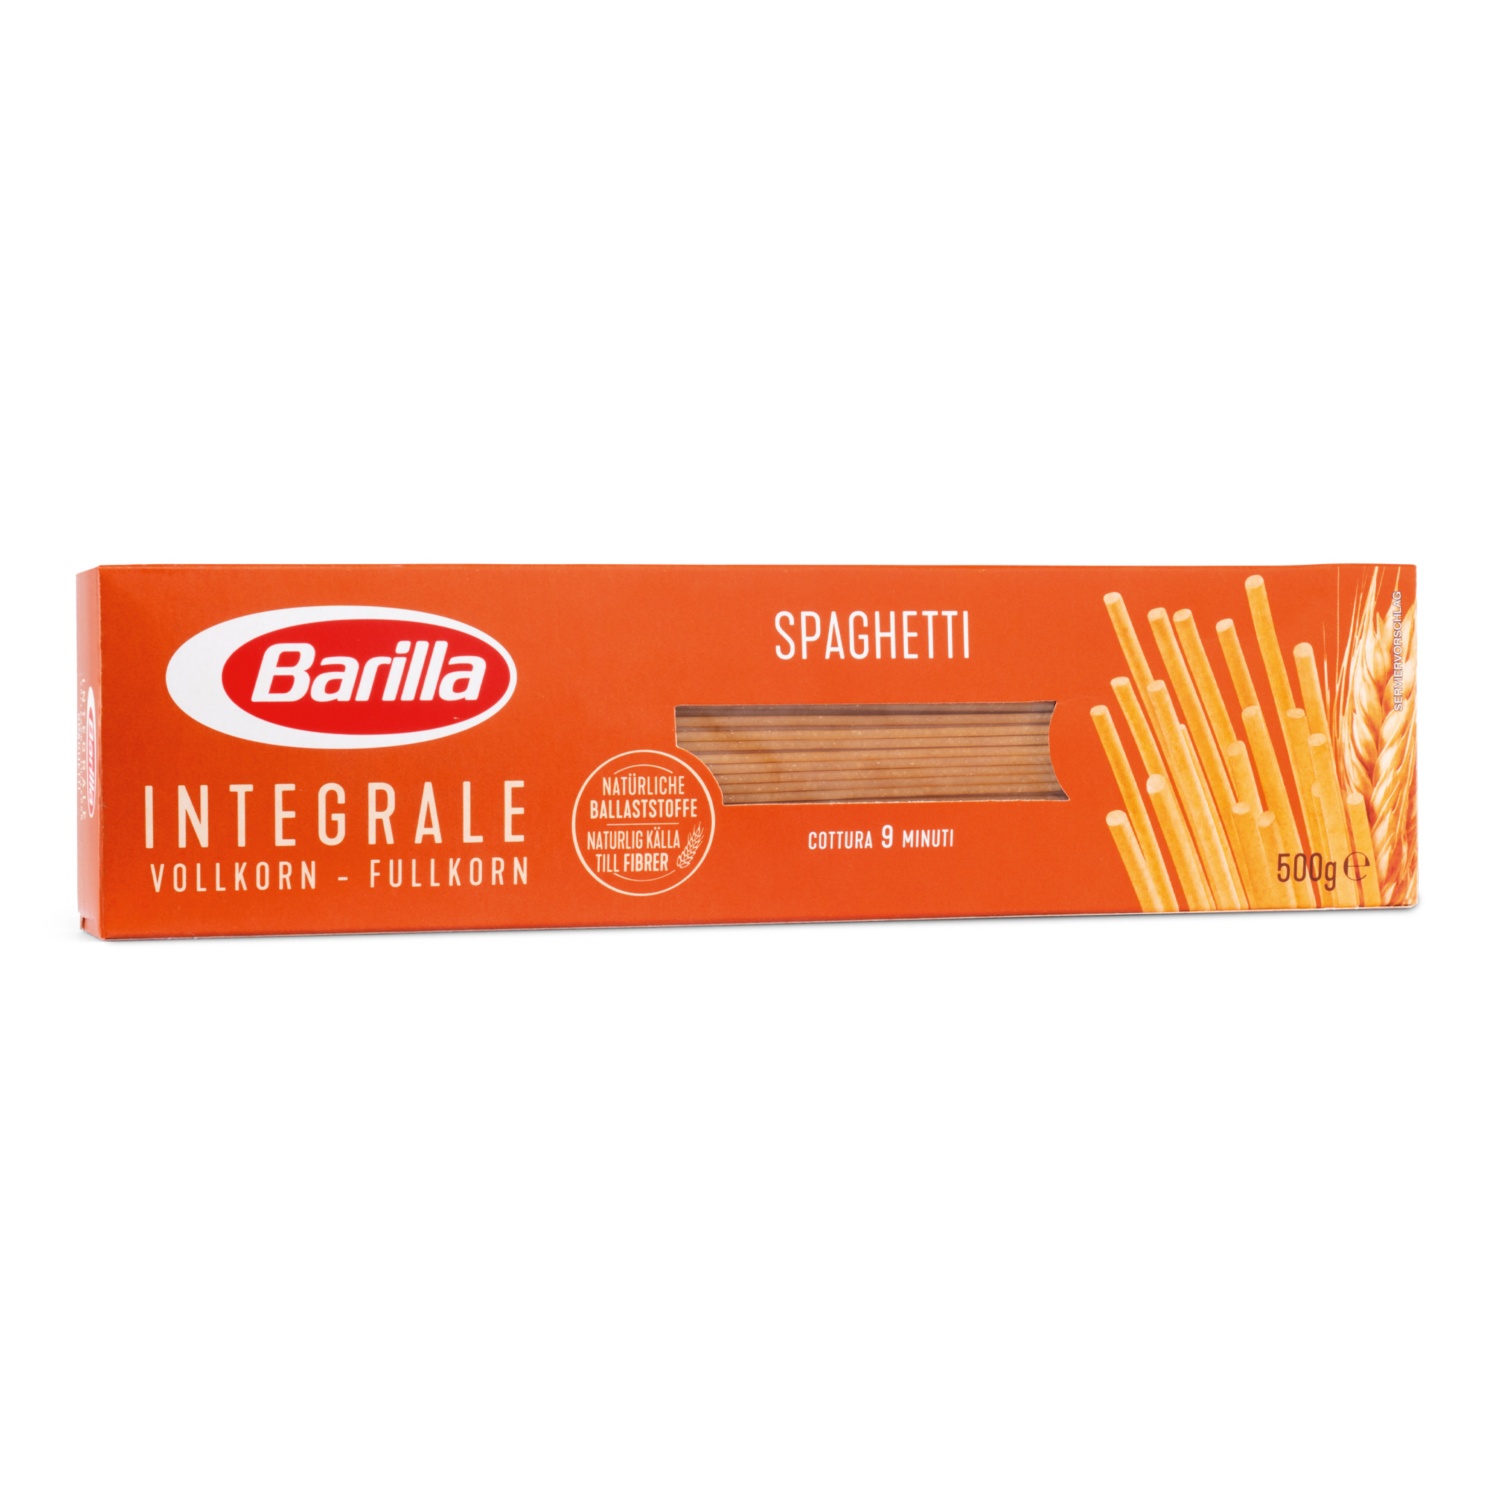 BARILLA Teigwaren integrale, Spaghetti